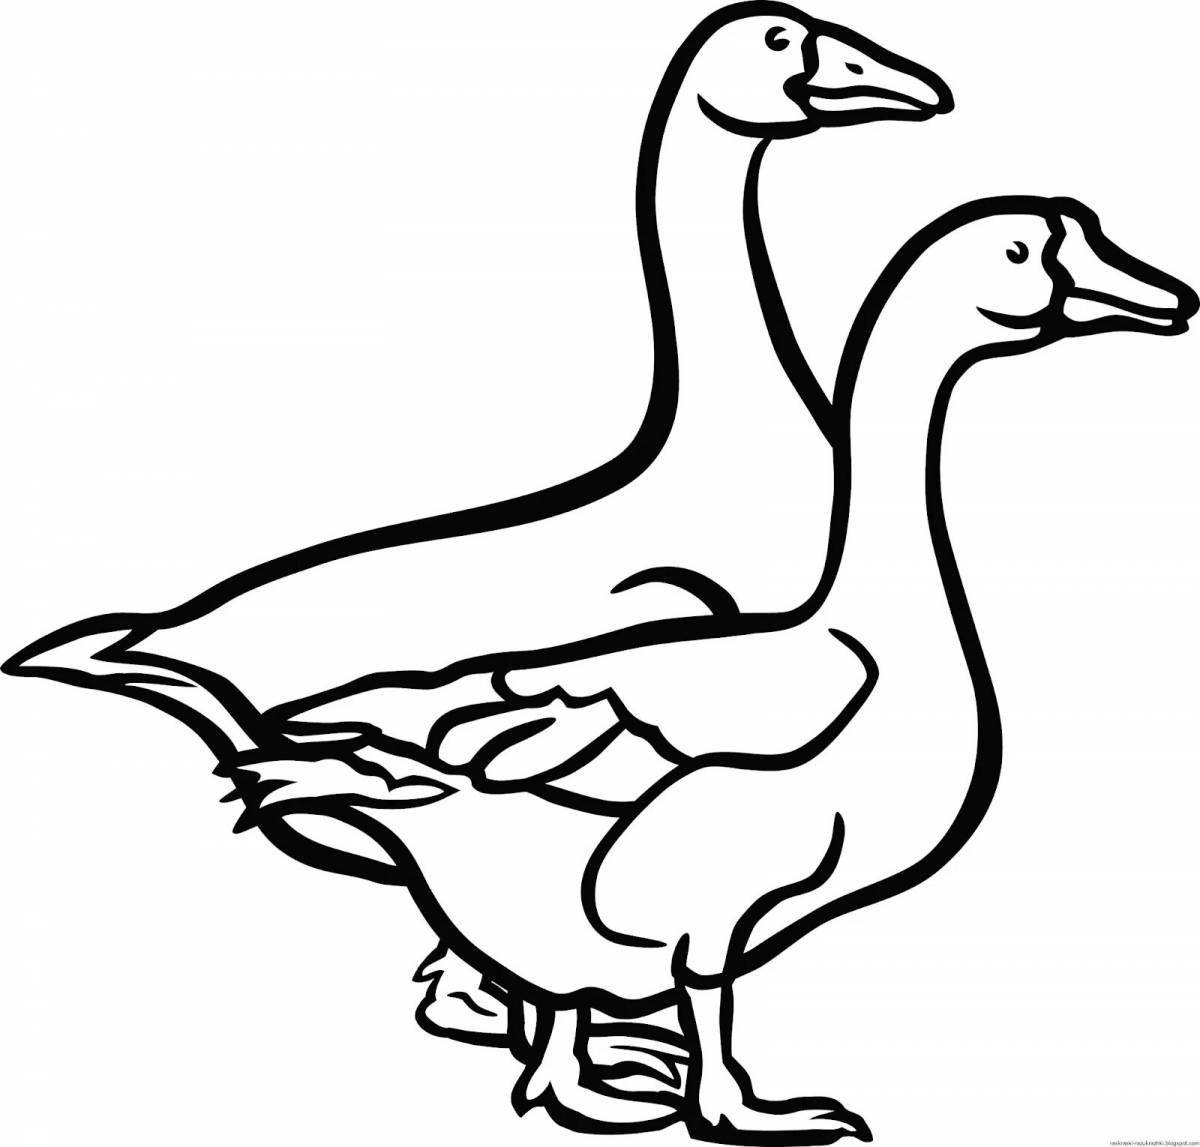 Coloring page energetic geese